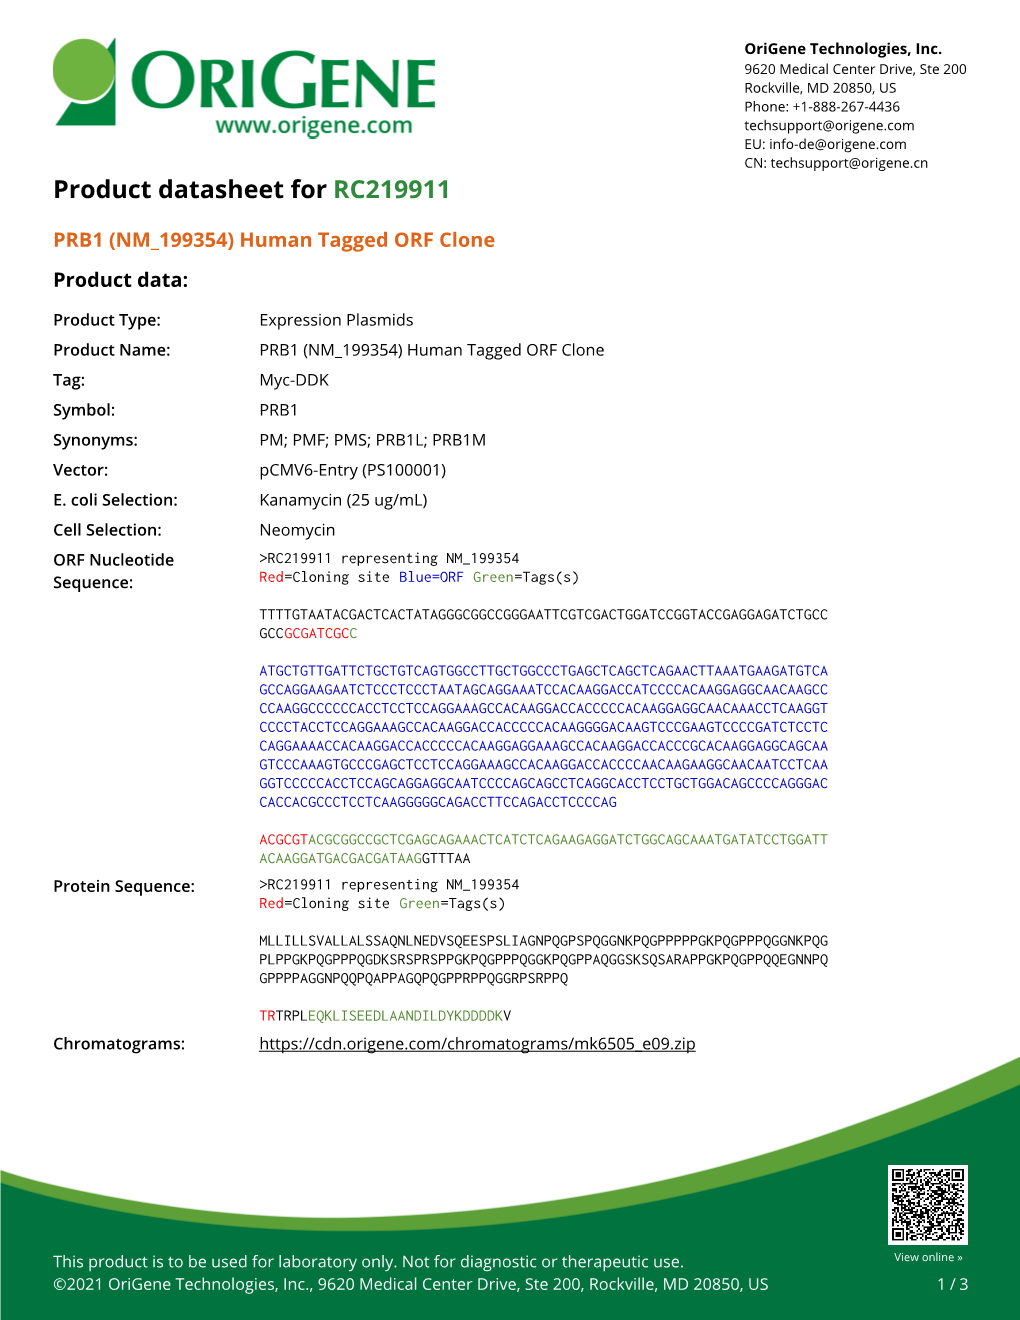 PRB1 (NM 199354) Human Tagged ORF Clone Product Data